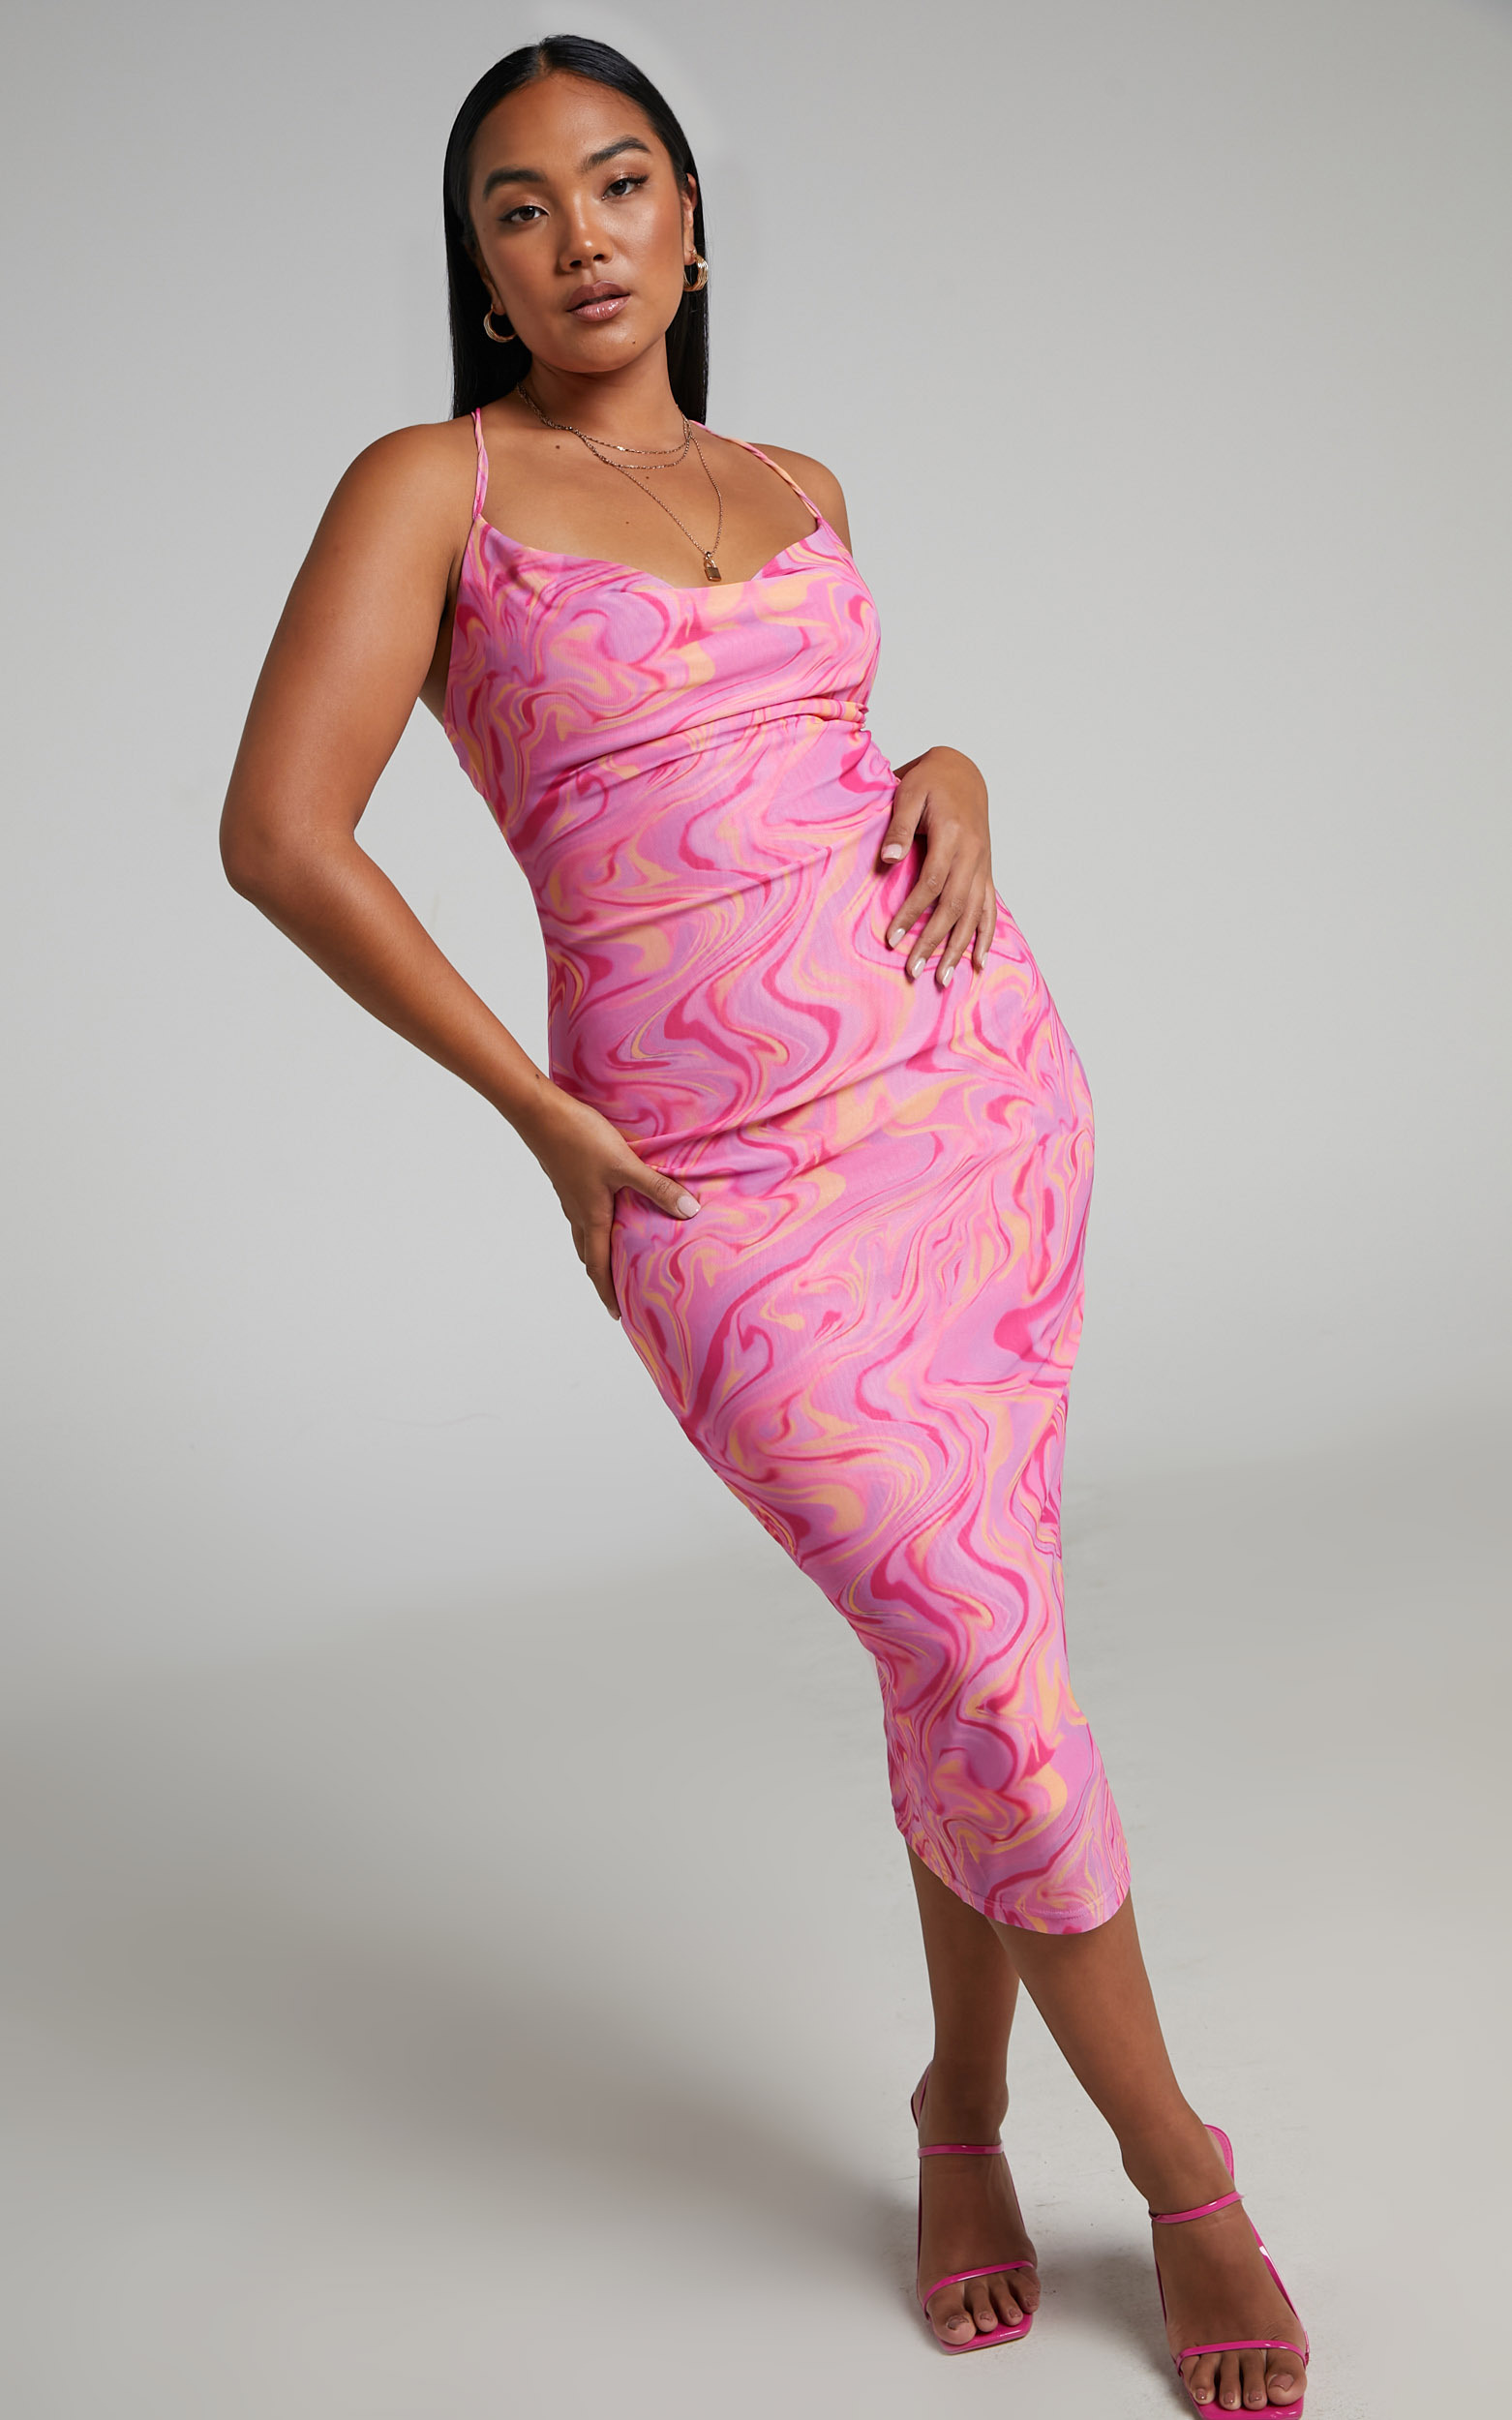 Helga Cowl Neck Ruched Midi Dress in Mesh in Pink Swirl | Showpo